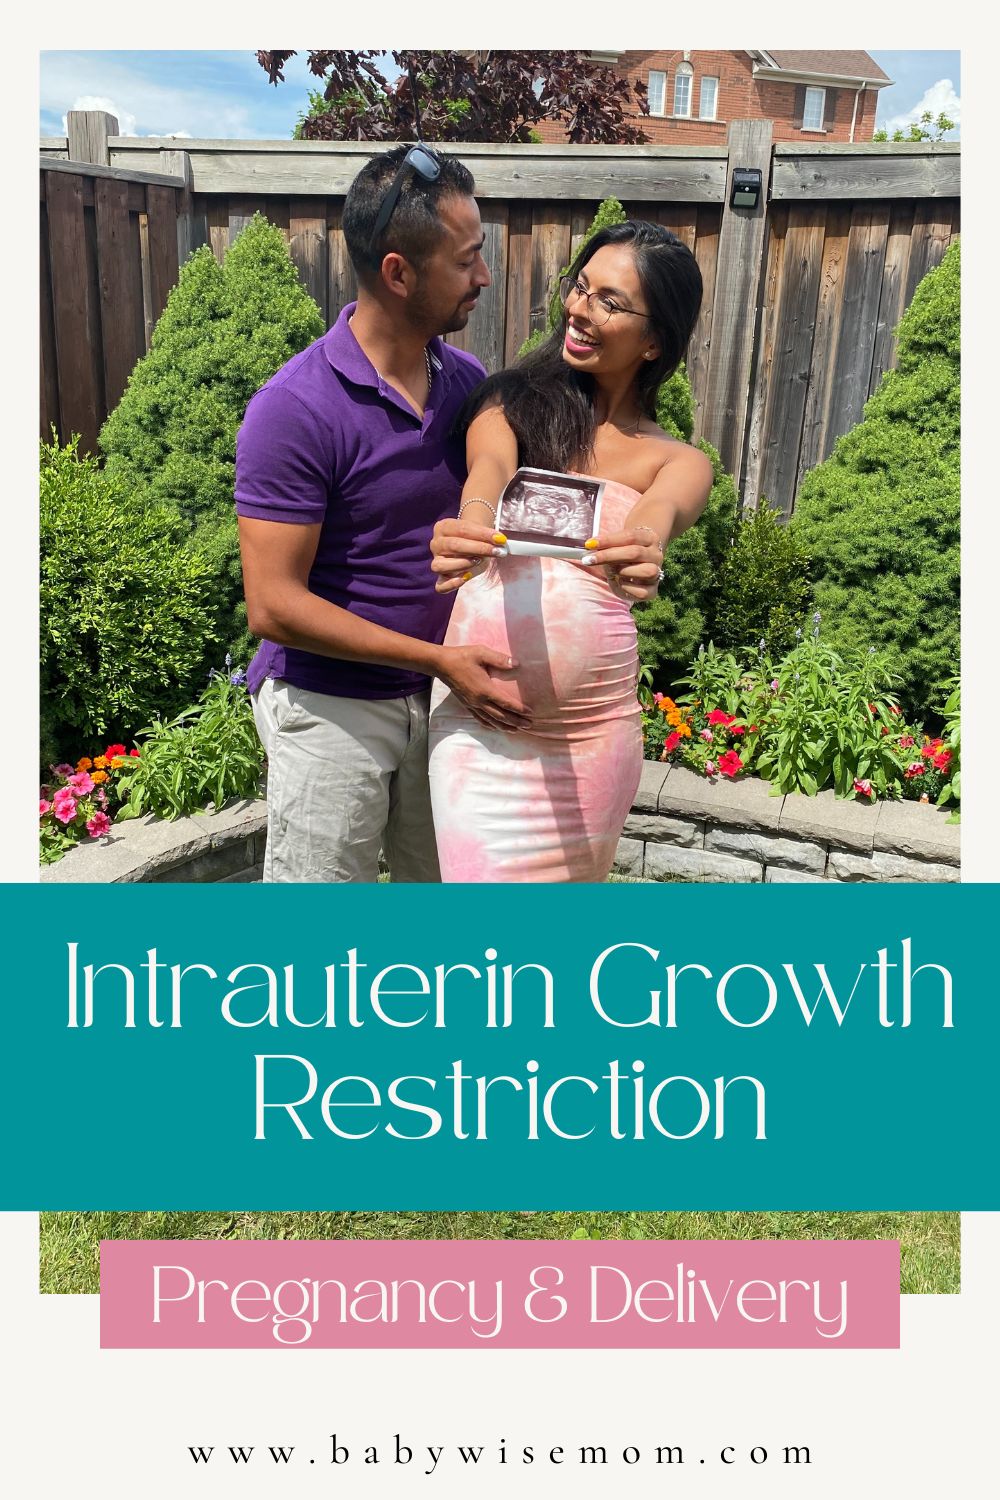 Intrauterin Growth Restriction